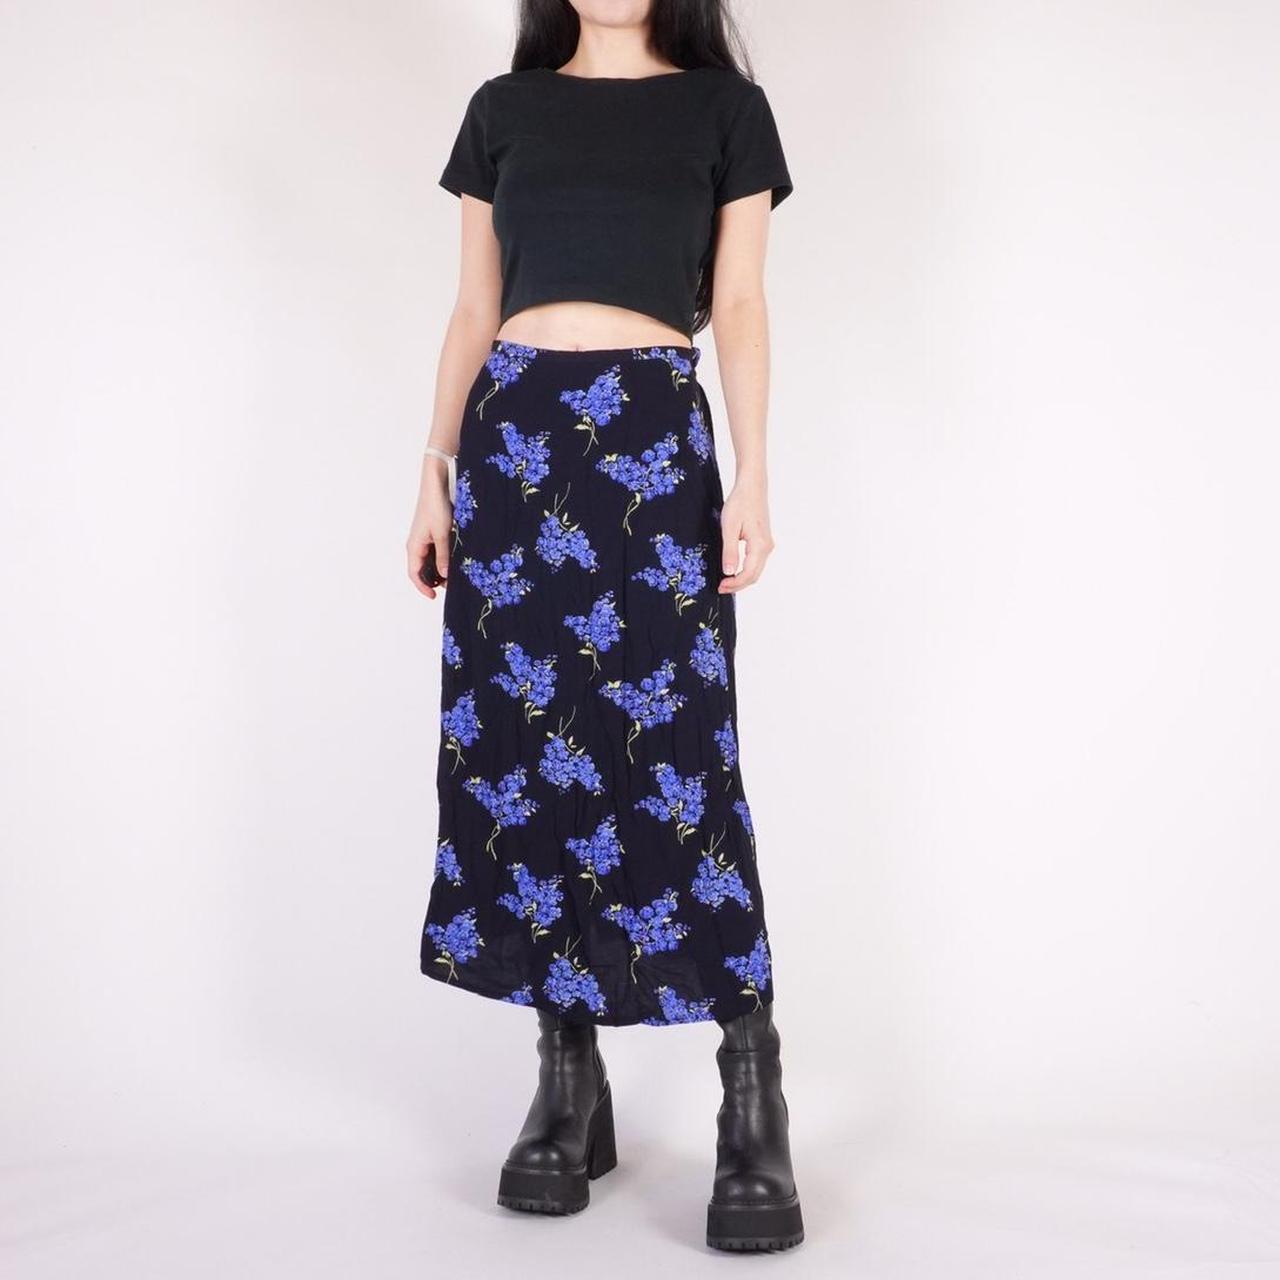 Women's Black and Blue Skirt | Depop